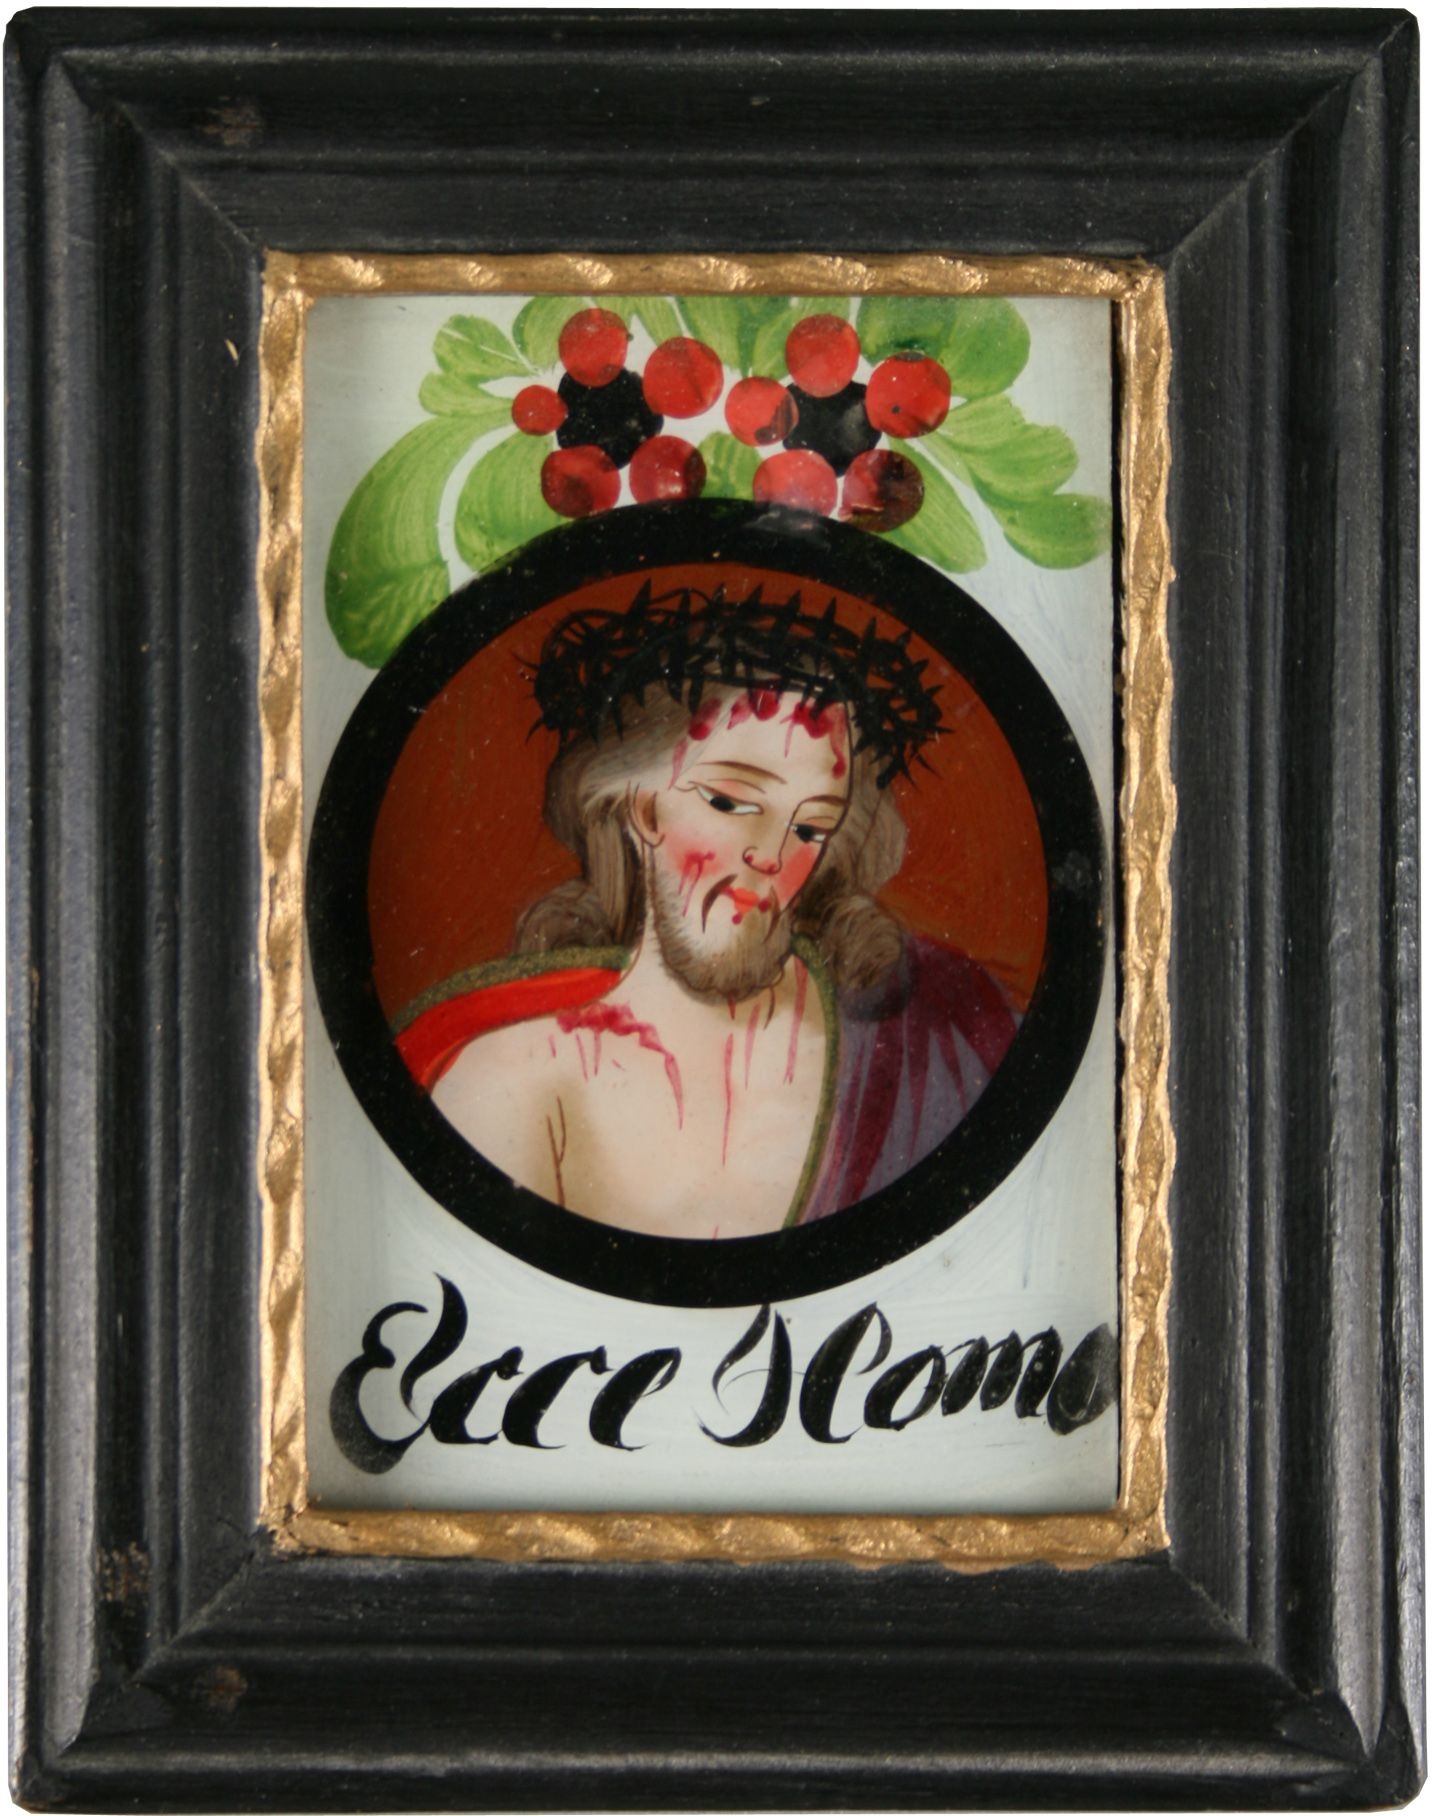 Ecce Homo (Altertumsverein 1851 e.V. Riedlingen CC BY-NC-SA)